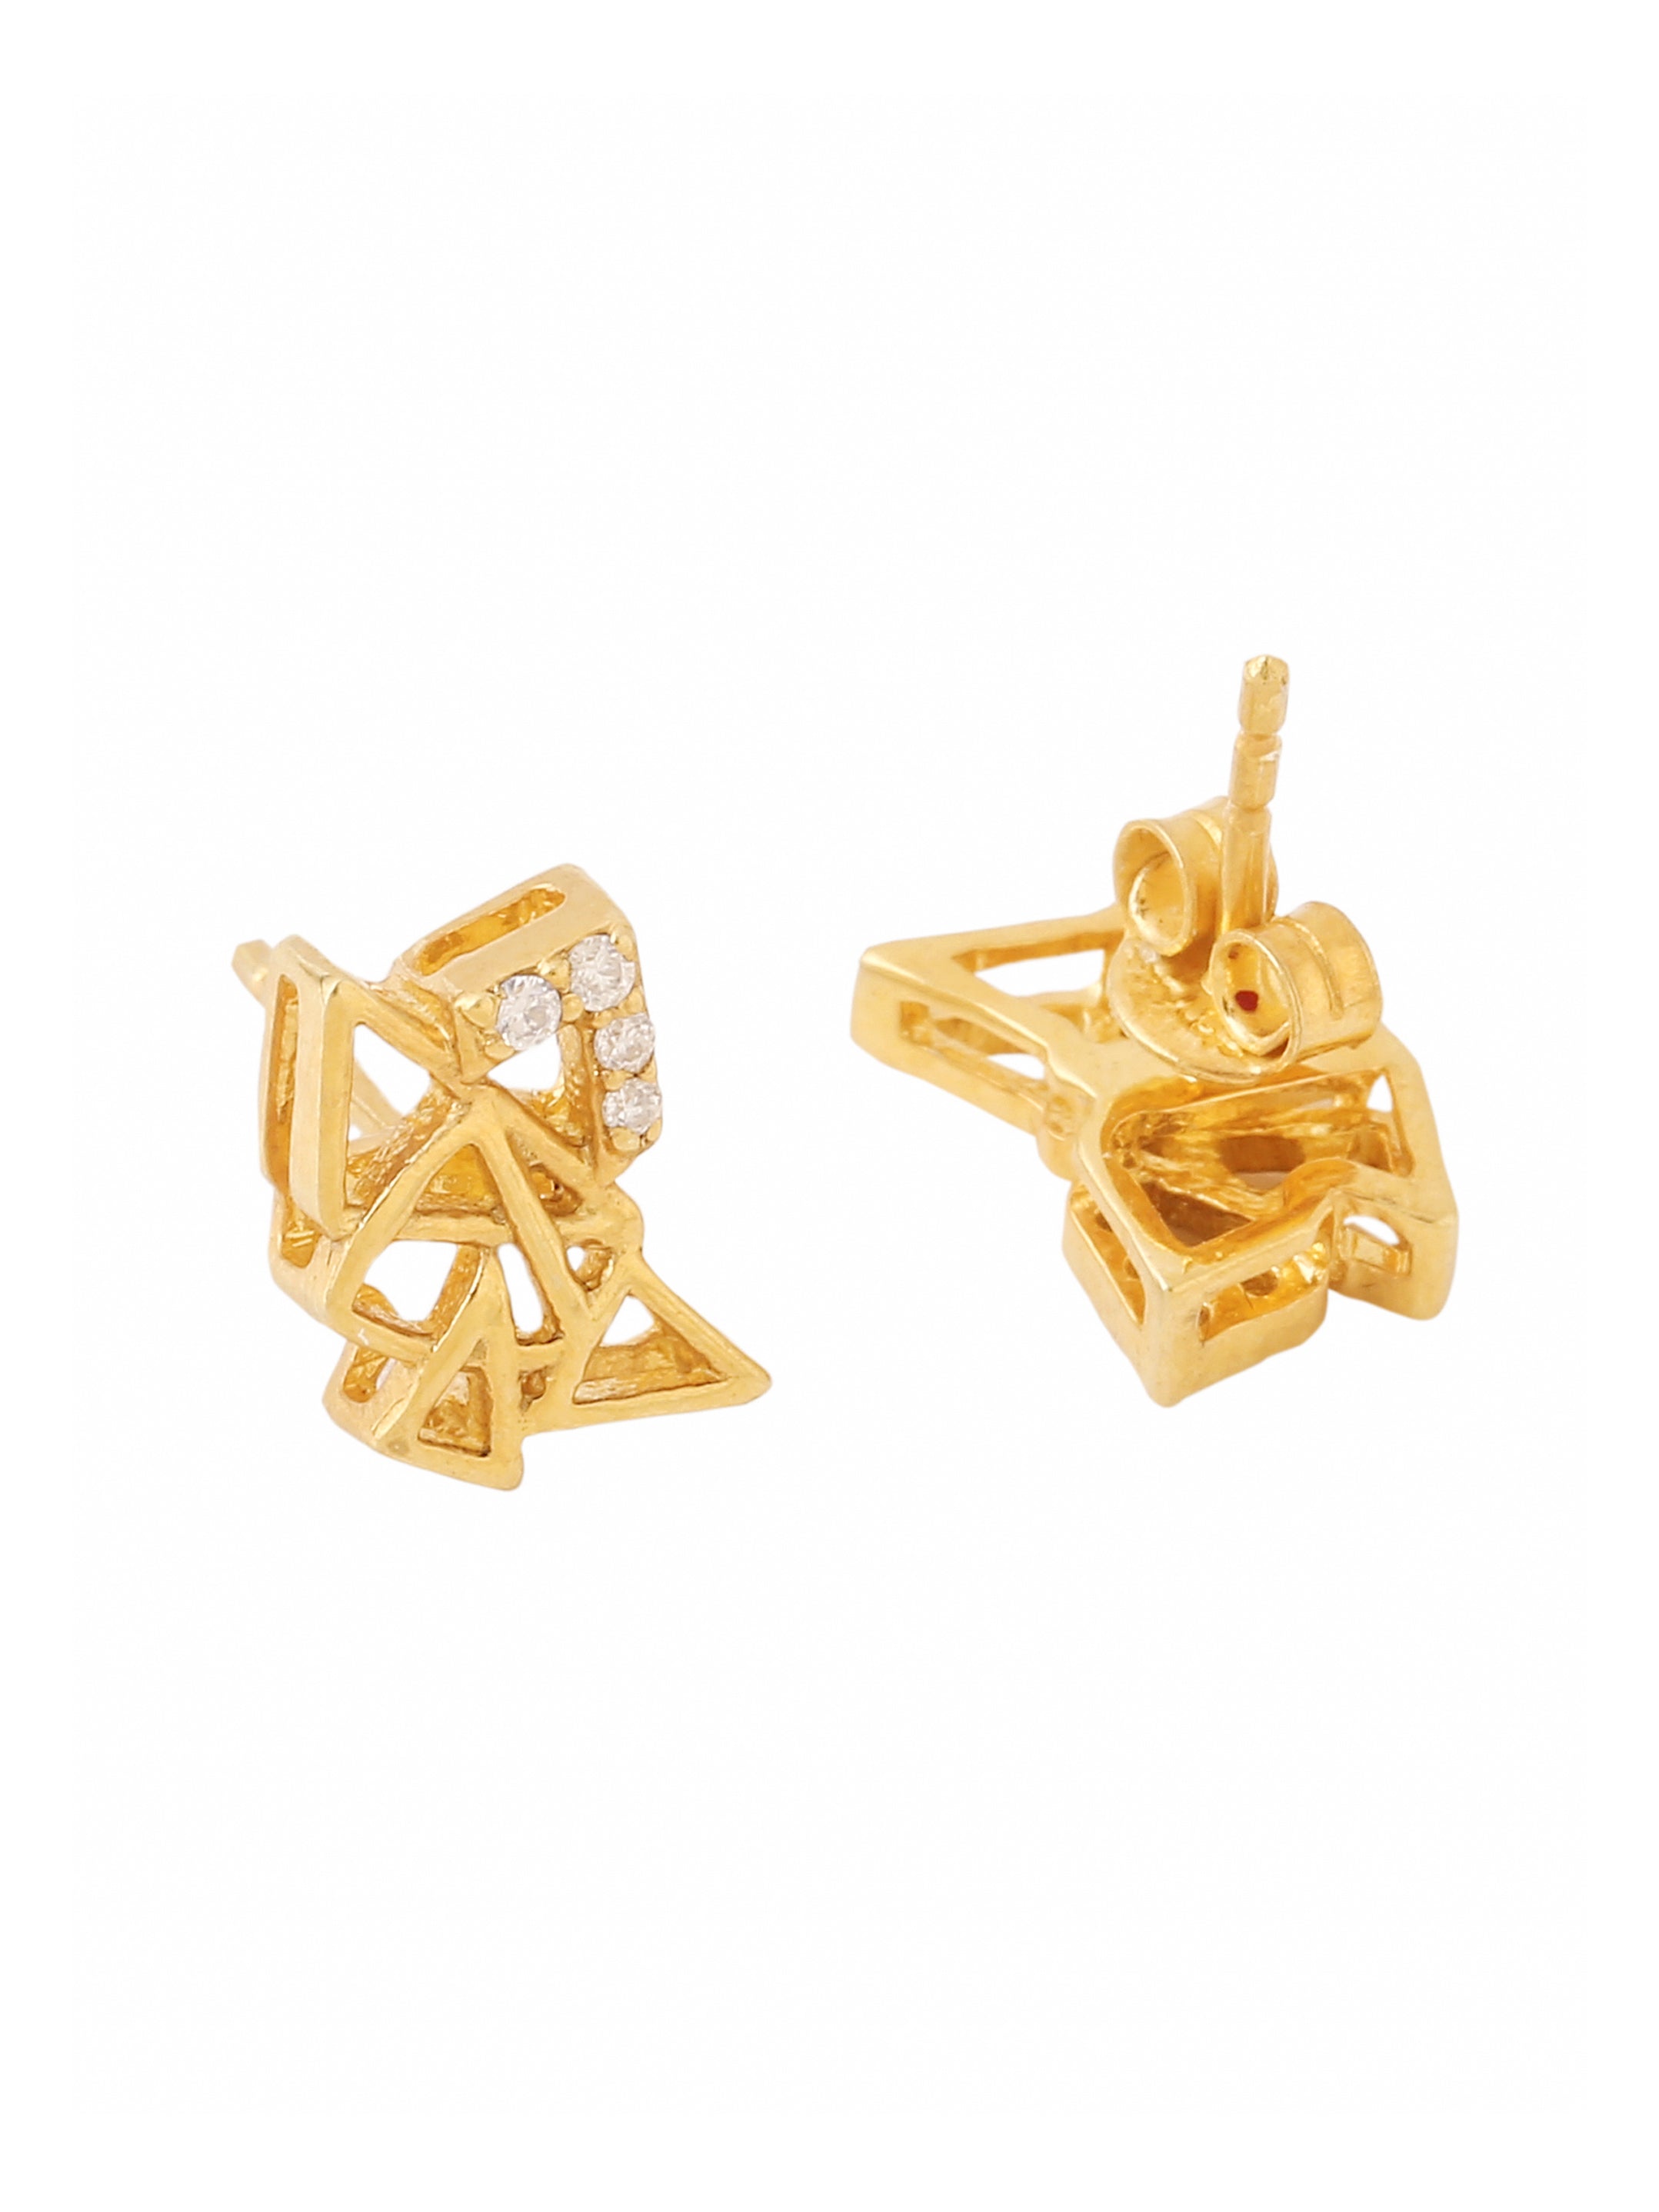 Symmetrical Gold-Plated Stud Earrings